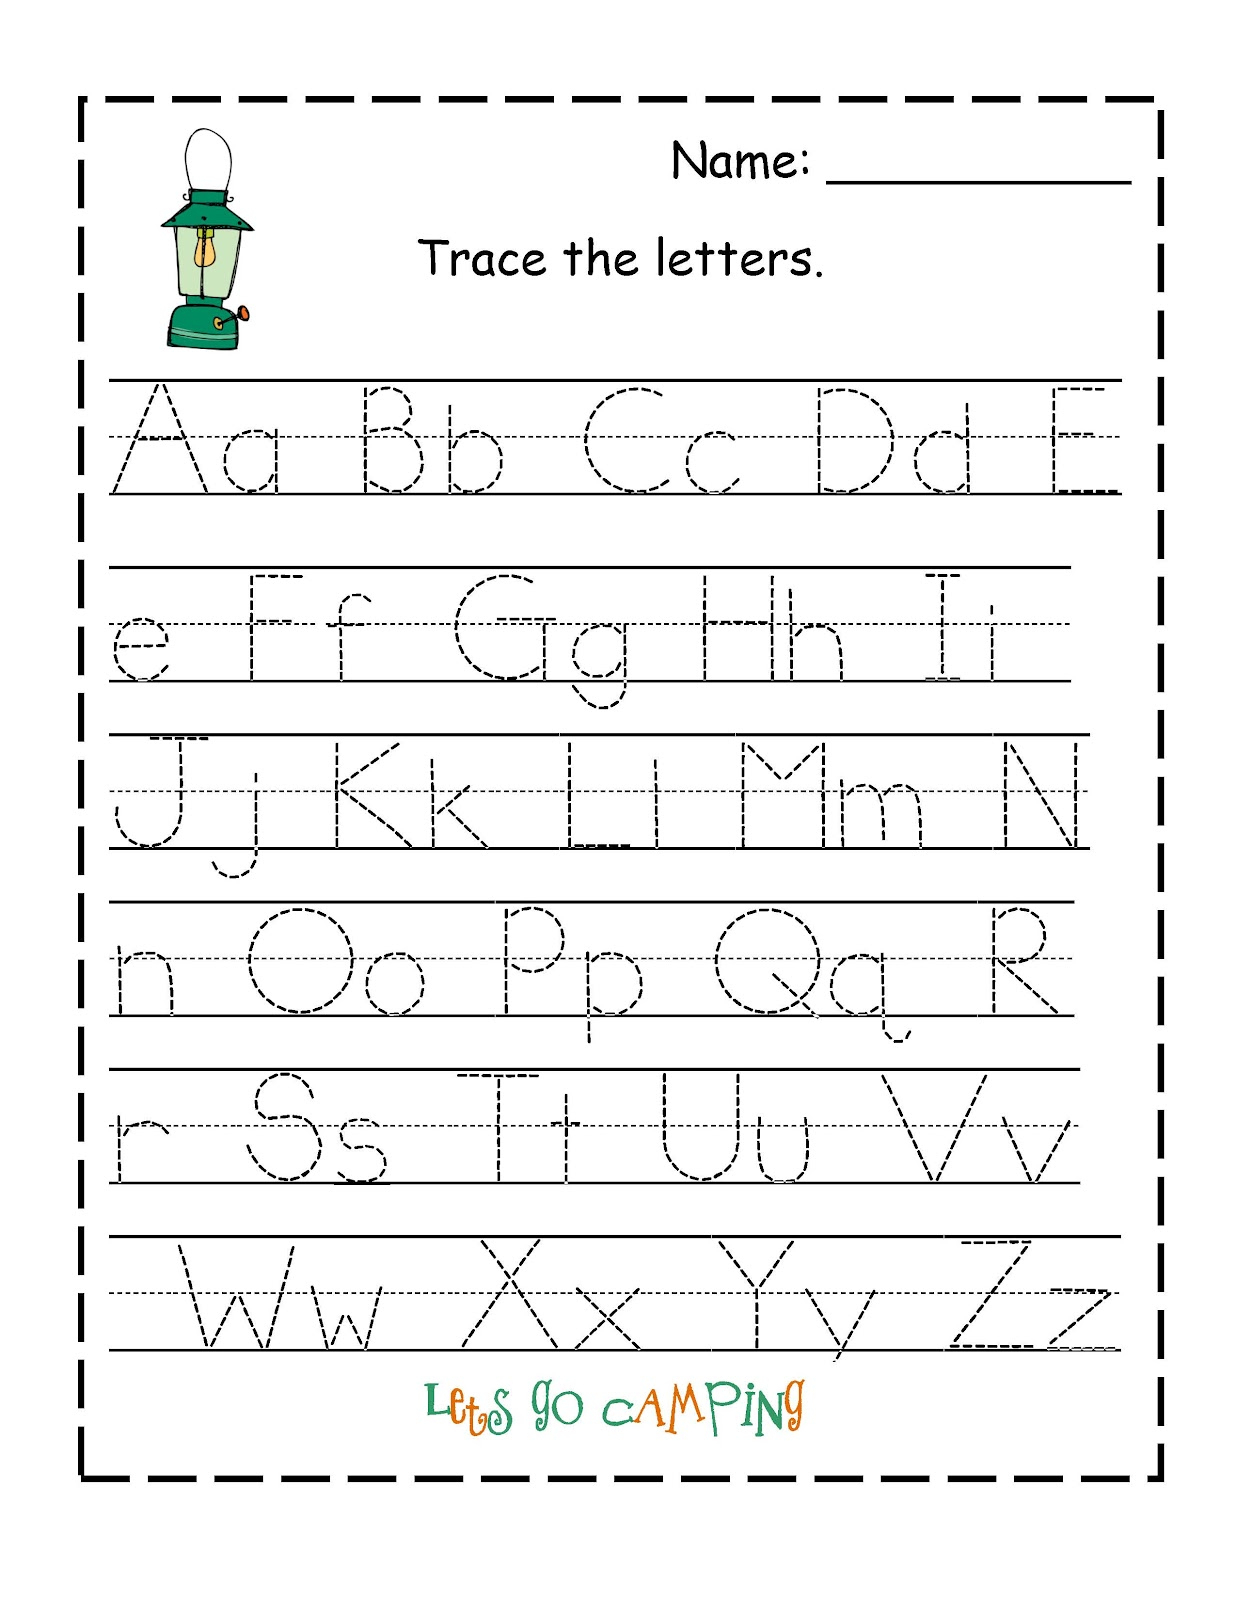 Alphabet Printables For Preschoolers Free | Kiddo Shelter | Alphabet Printables Free Worksheets